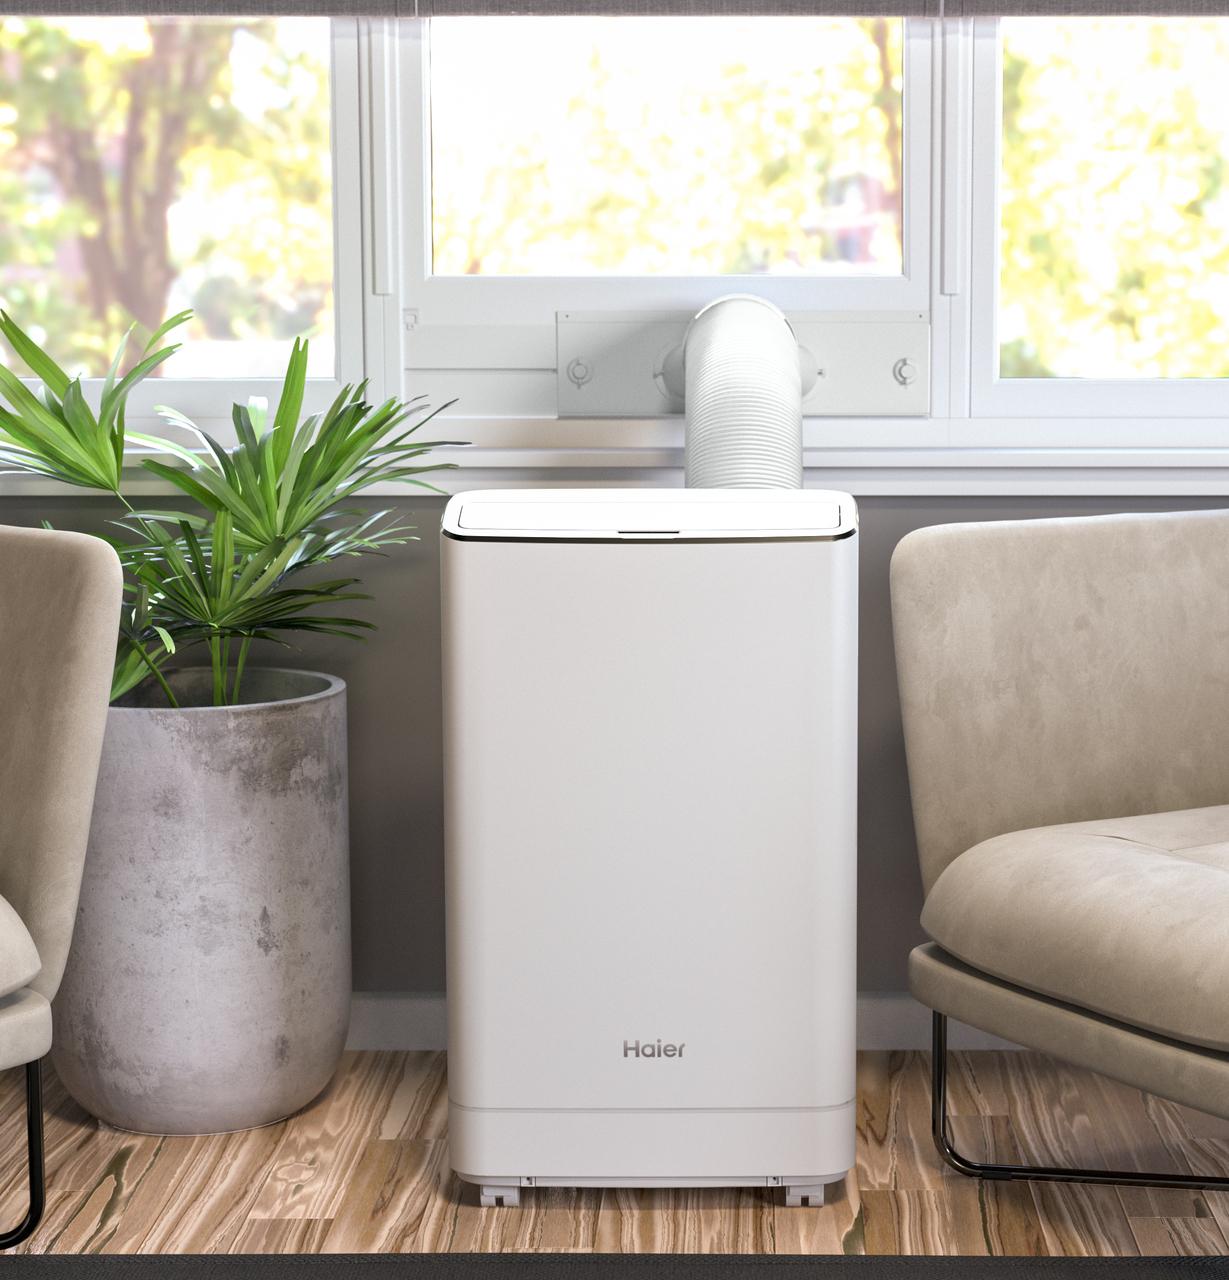 Haier® Portable Air Conditioner with Dehumidifier for Medium Rooms up to 350 sq. ft., 10,000 BTU (6,700 BTU SACC)